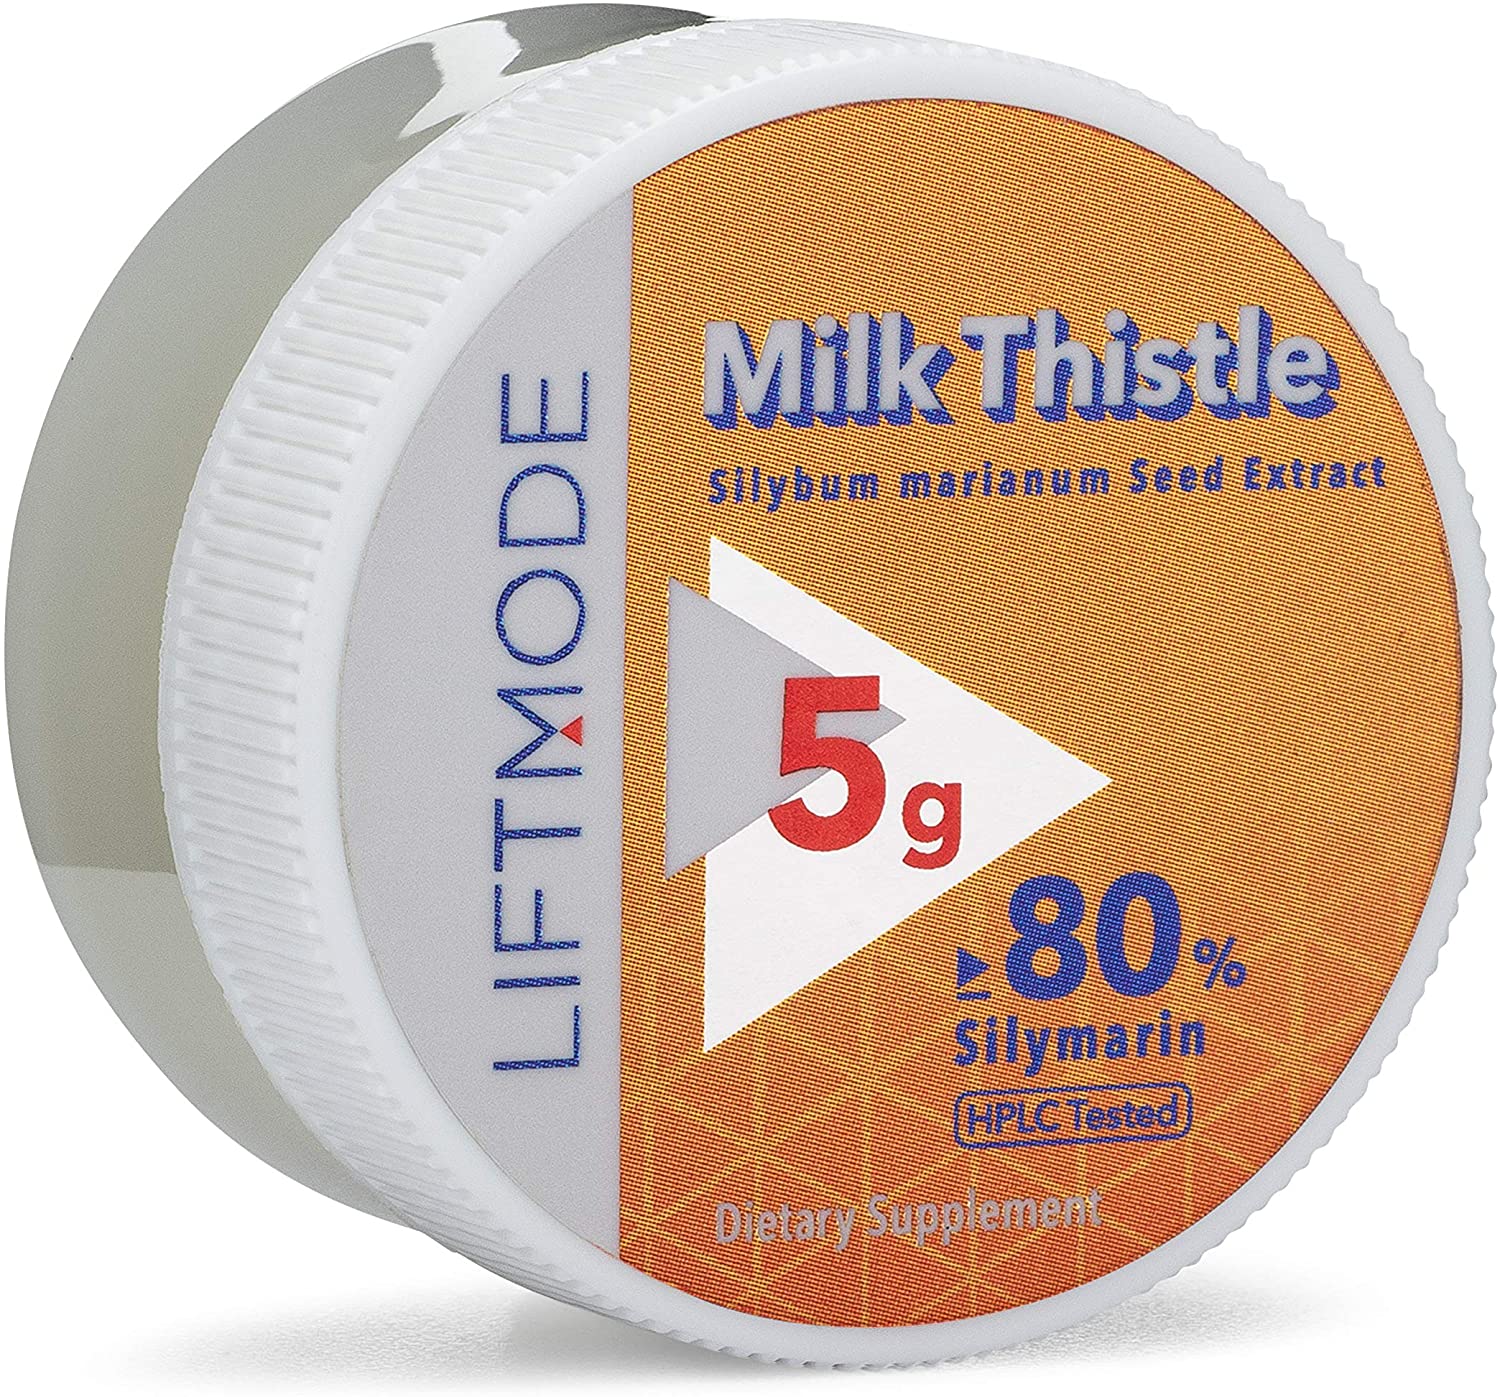 Liftmode Milk Thistle Extract Powder - 5 g-4